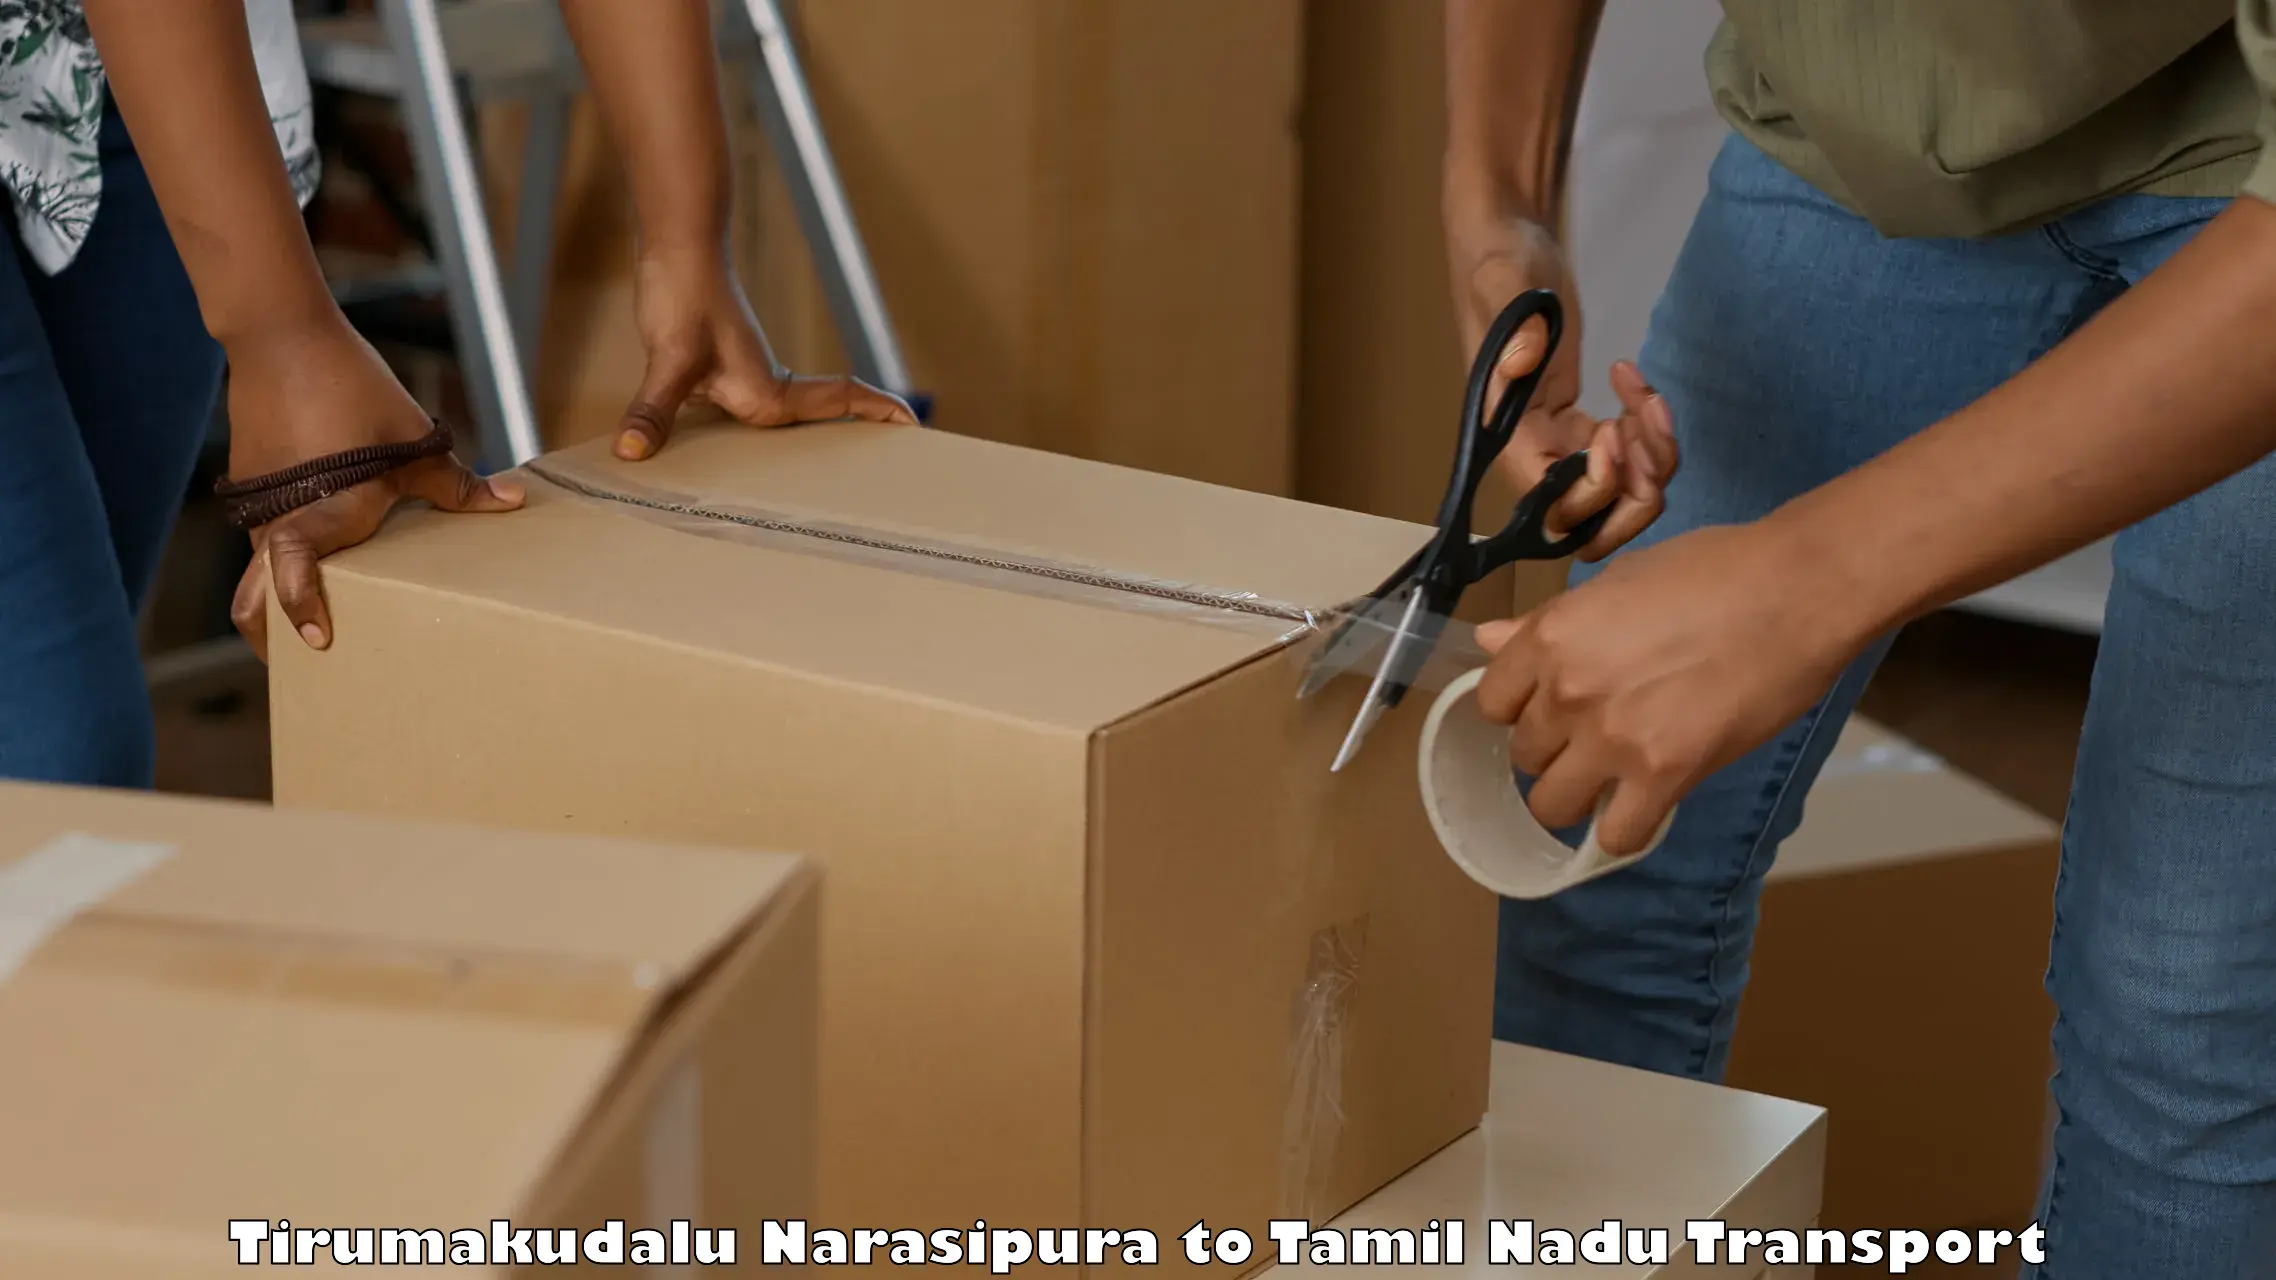 Furniture transport service Tirumakudalu Narasipura to Mayiladuthurai